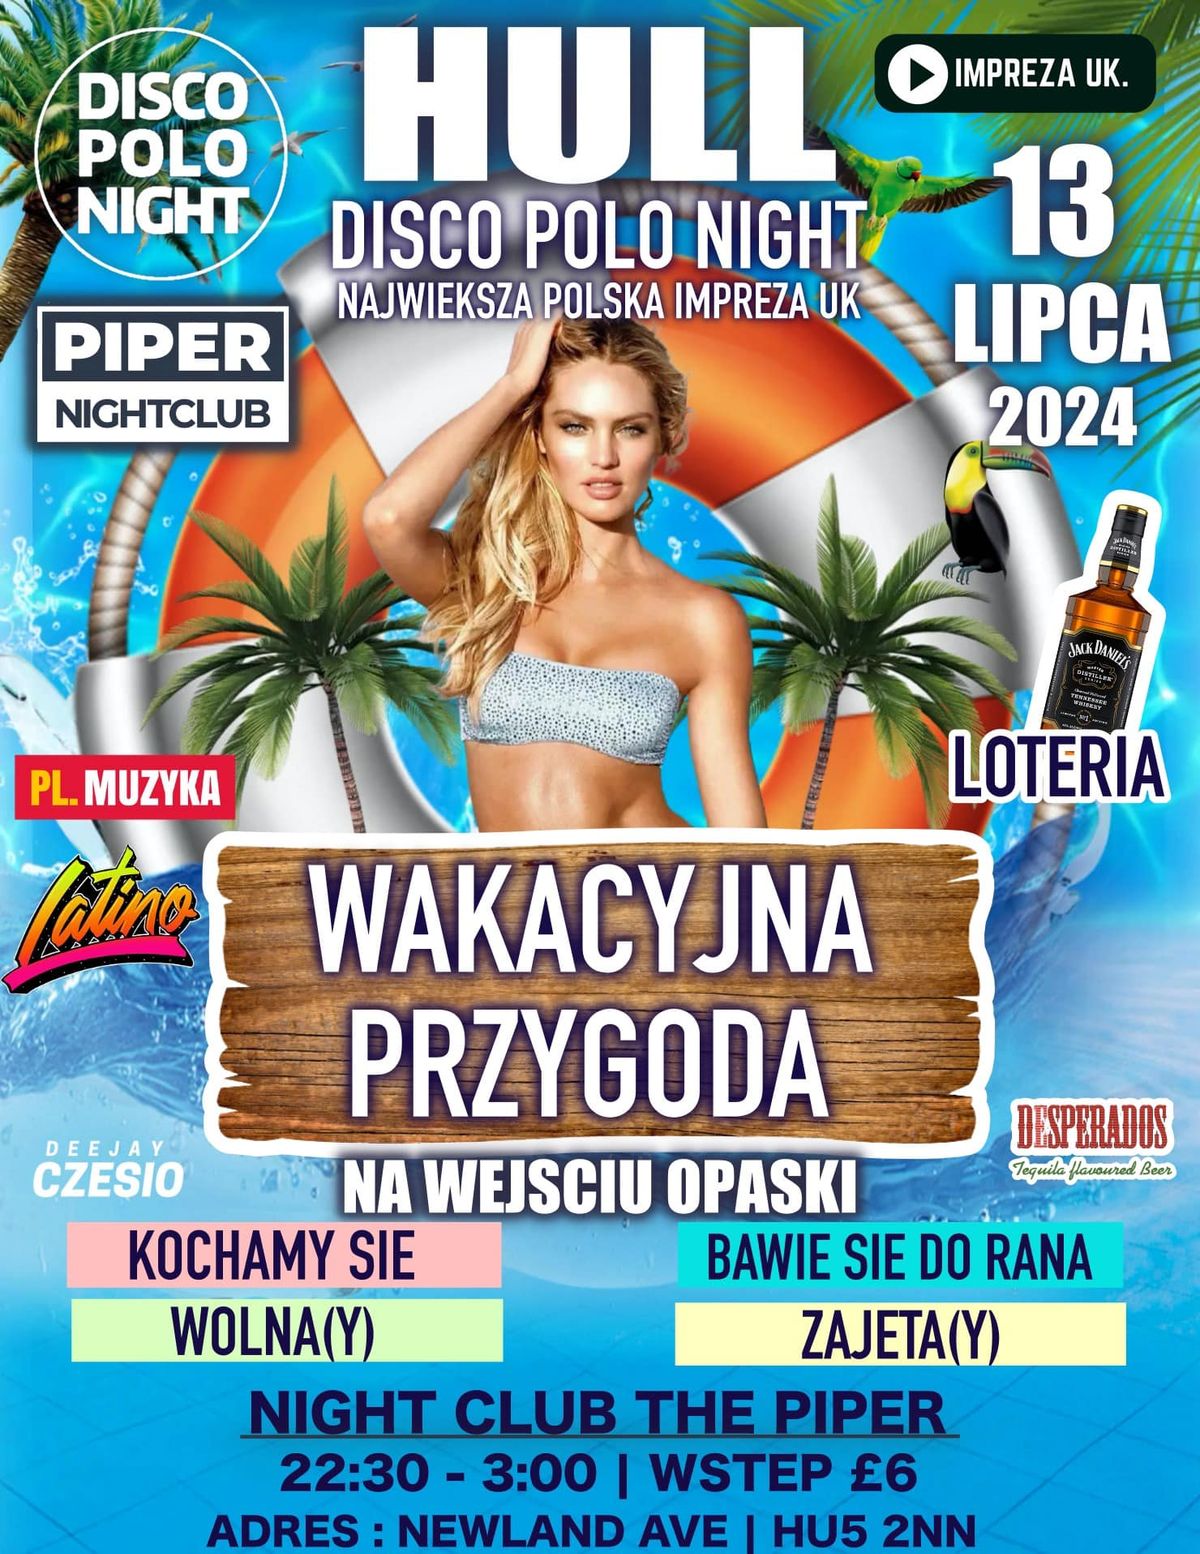 Disco Polo Night - UK's Biggest Polish Party